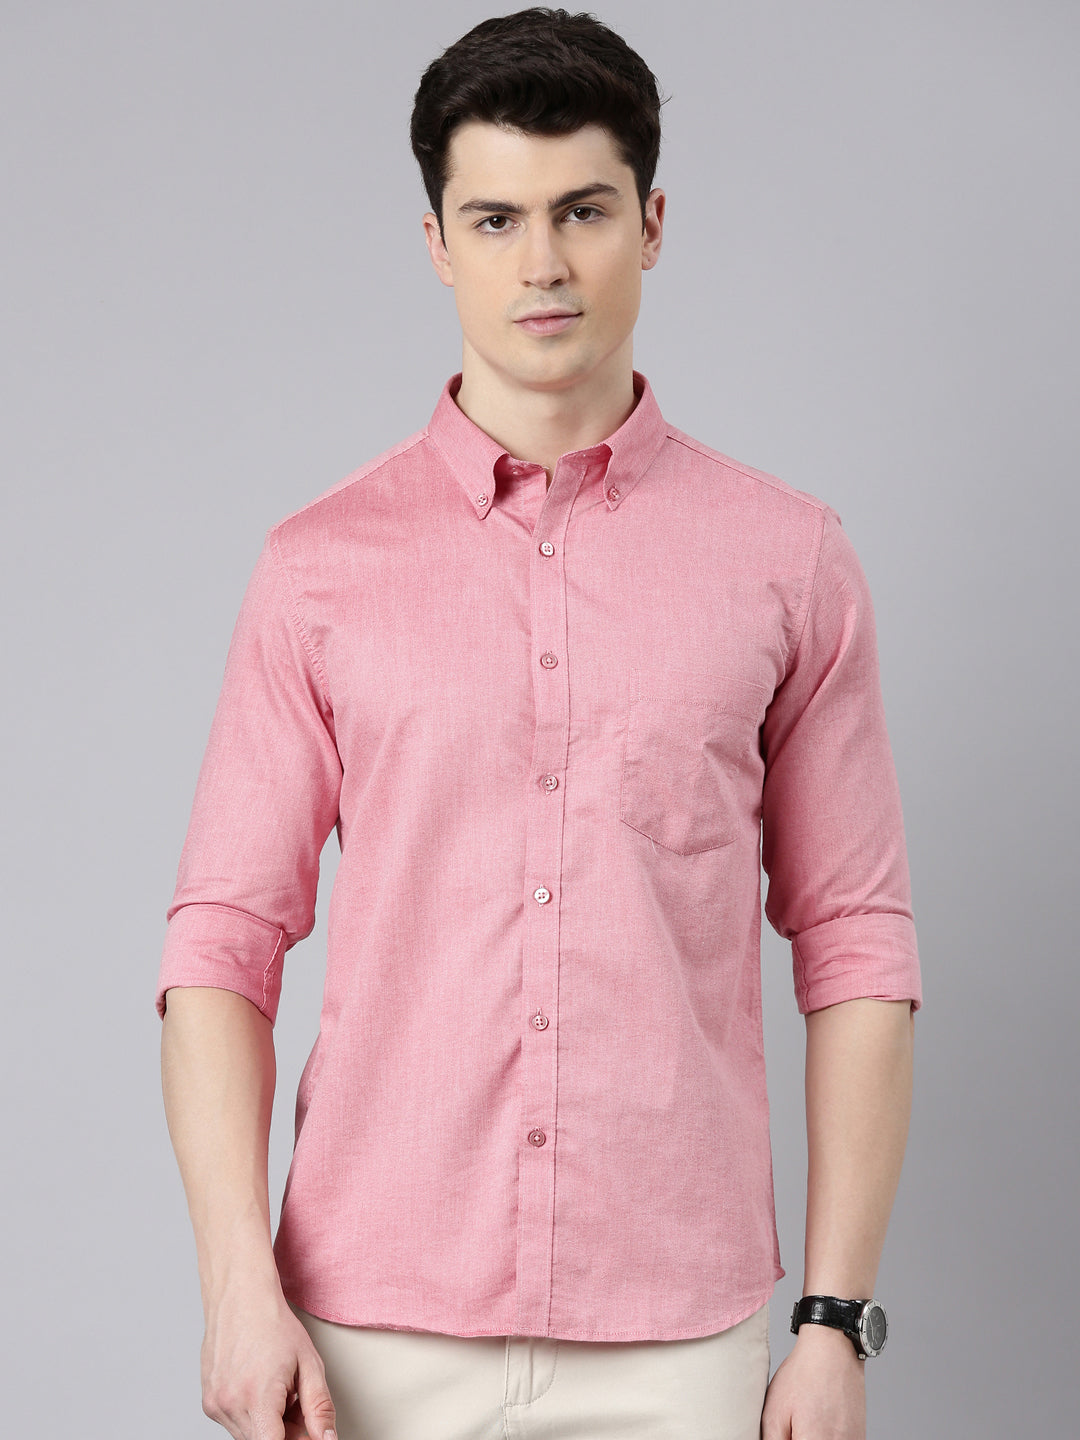 New York Pink Button down Solid Shirt Solid Shirt Bushirt   